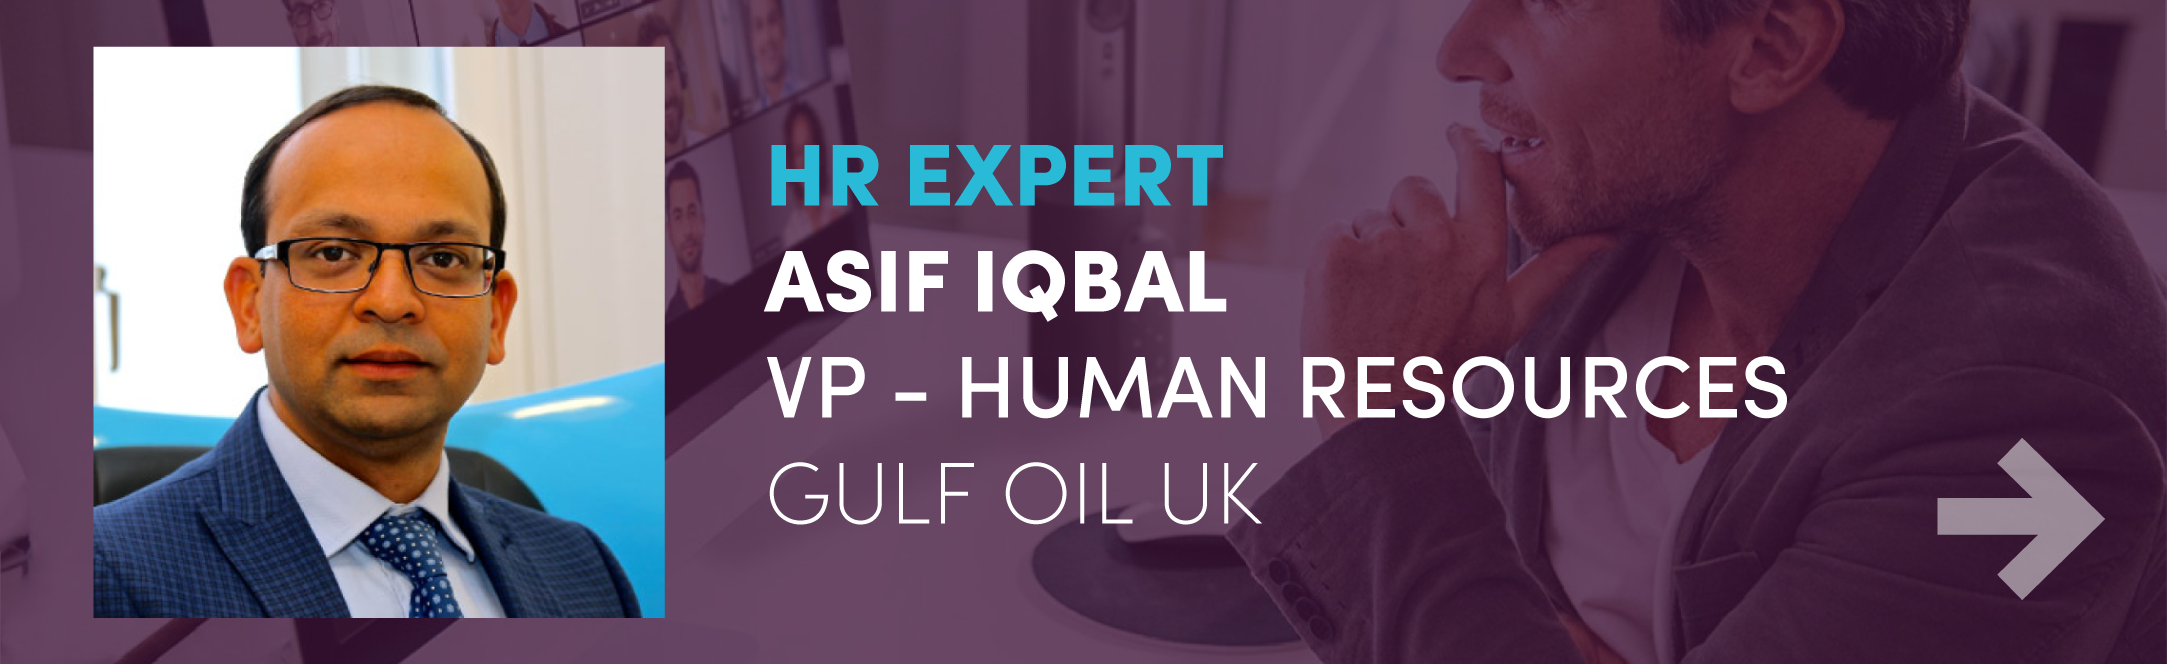 Asif Iqbal hr expert human resources